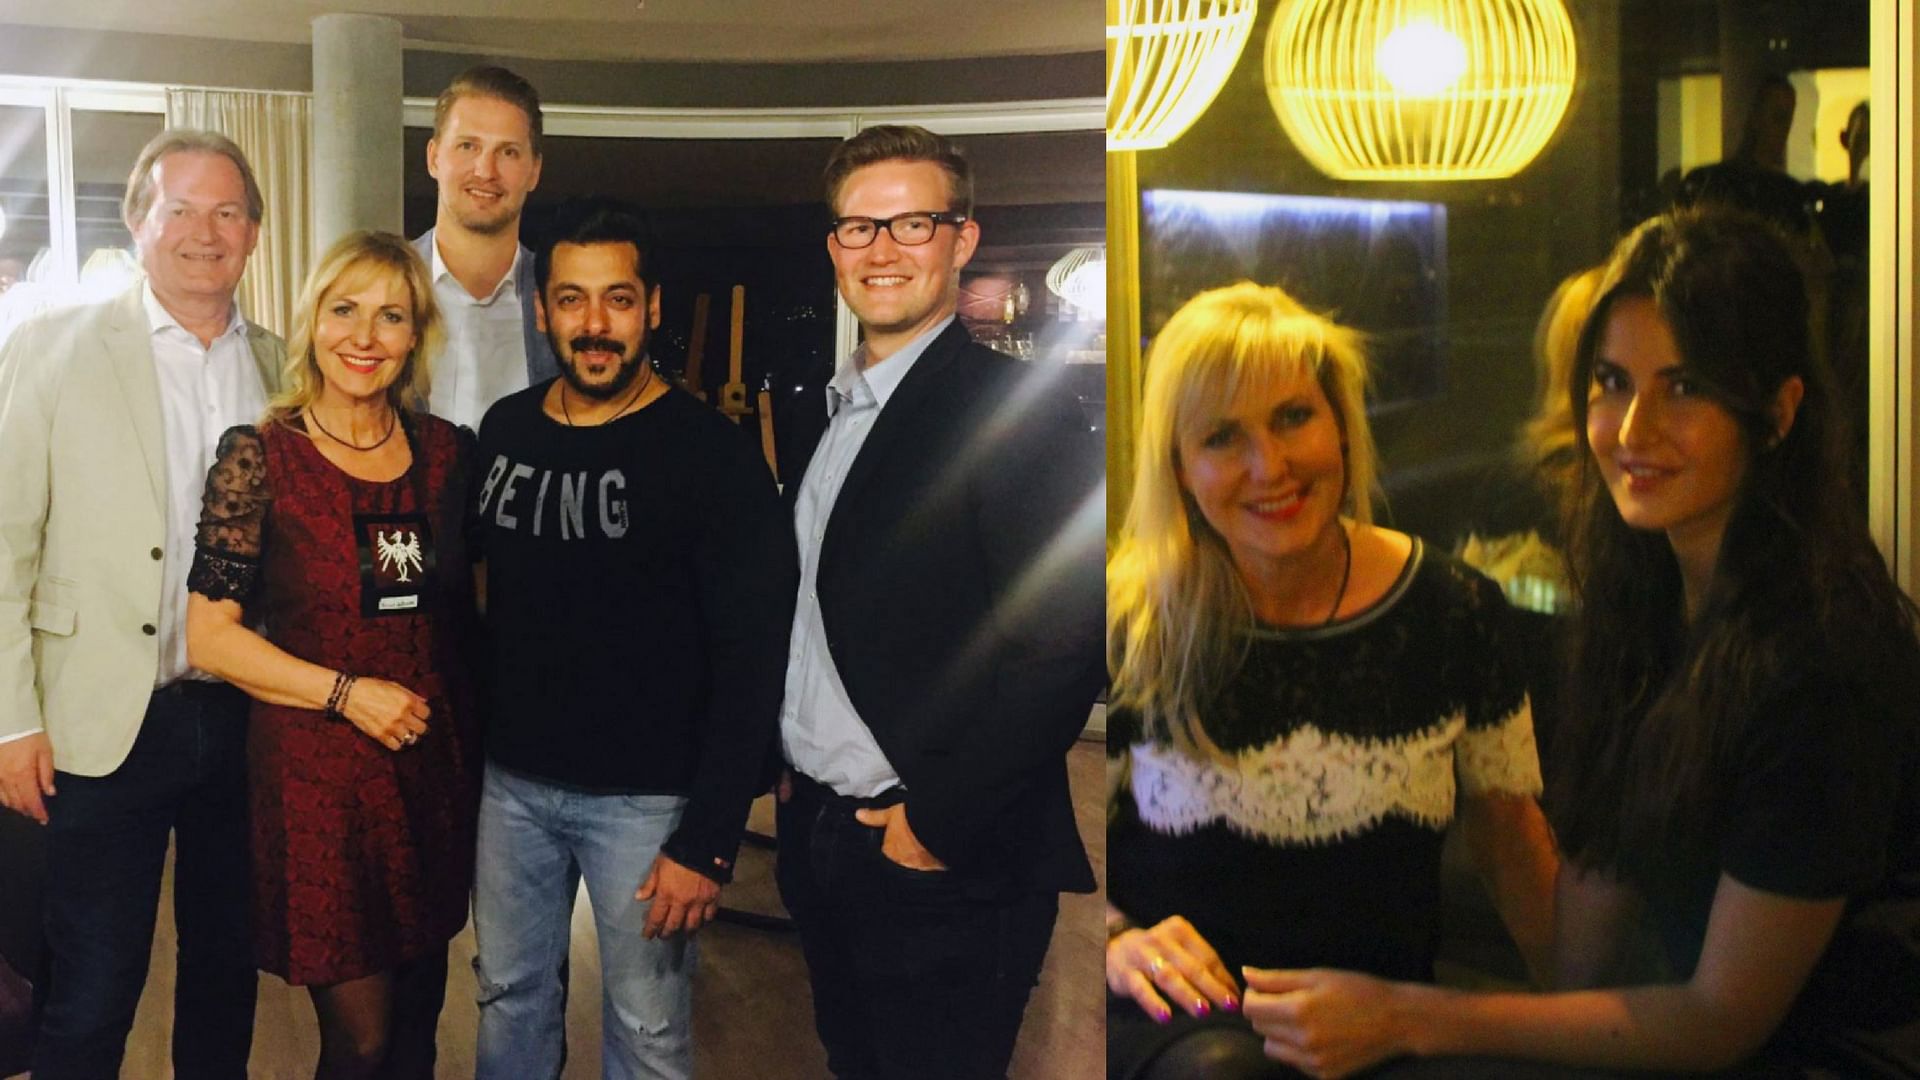 Salman Khan and Katrina Kaif at Innsbruck’s Adlers Hotel. (Photo Courtesy: Facebook/Adlers Hotel Innsbruck)